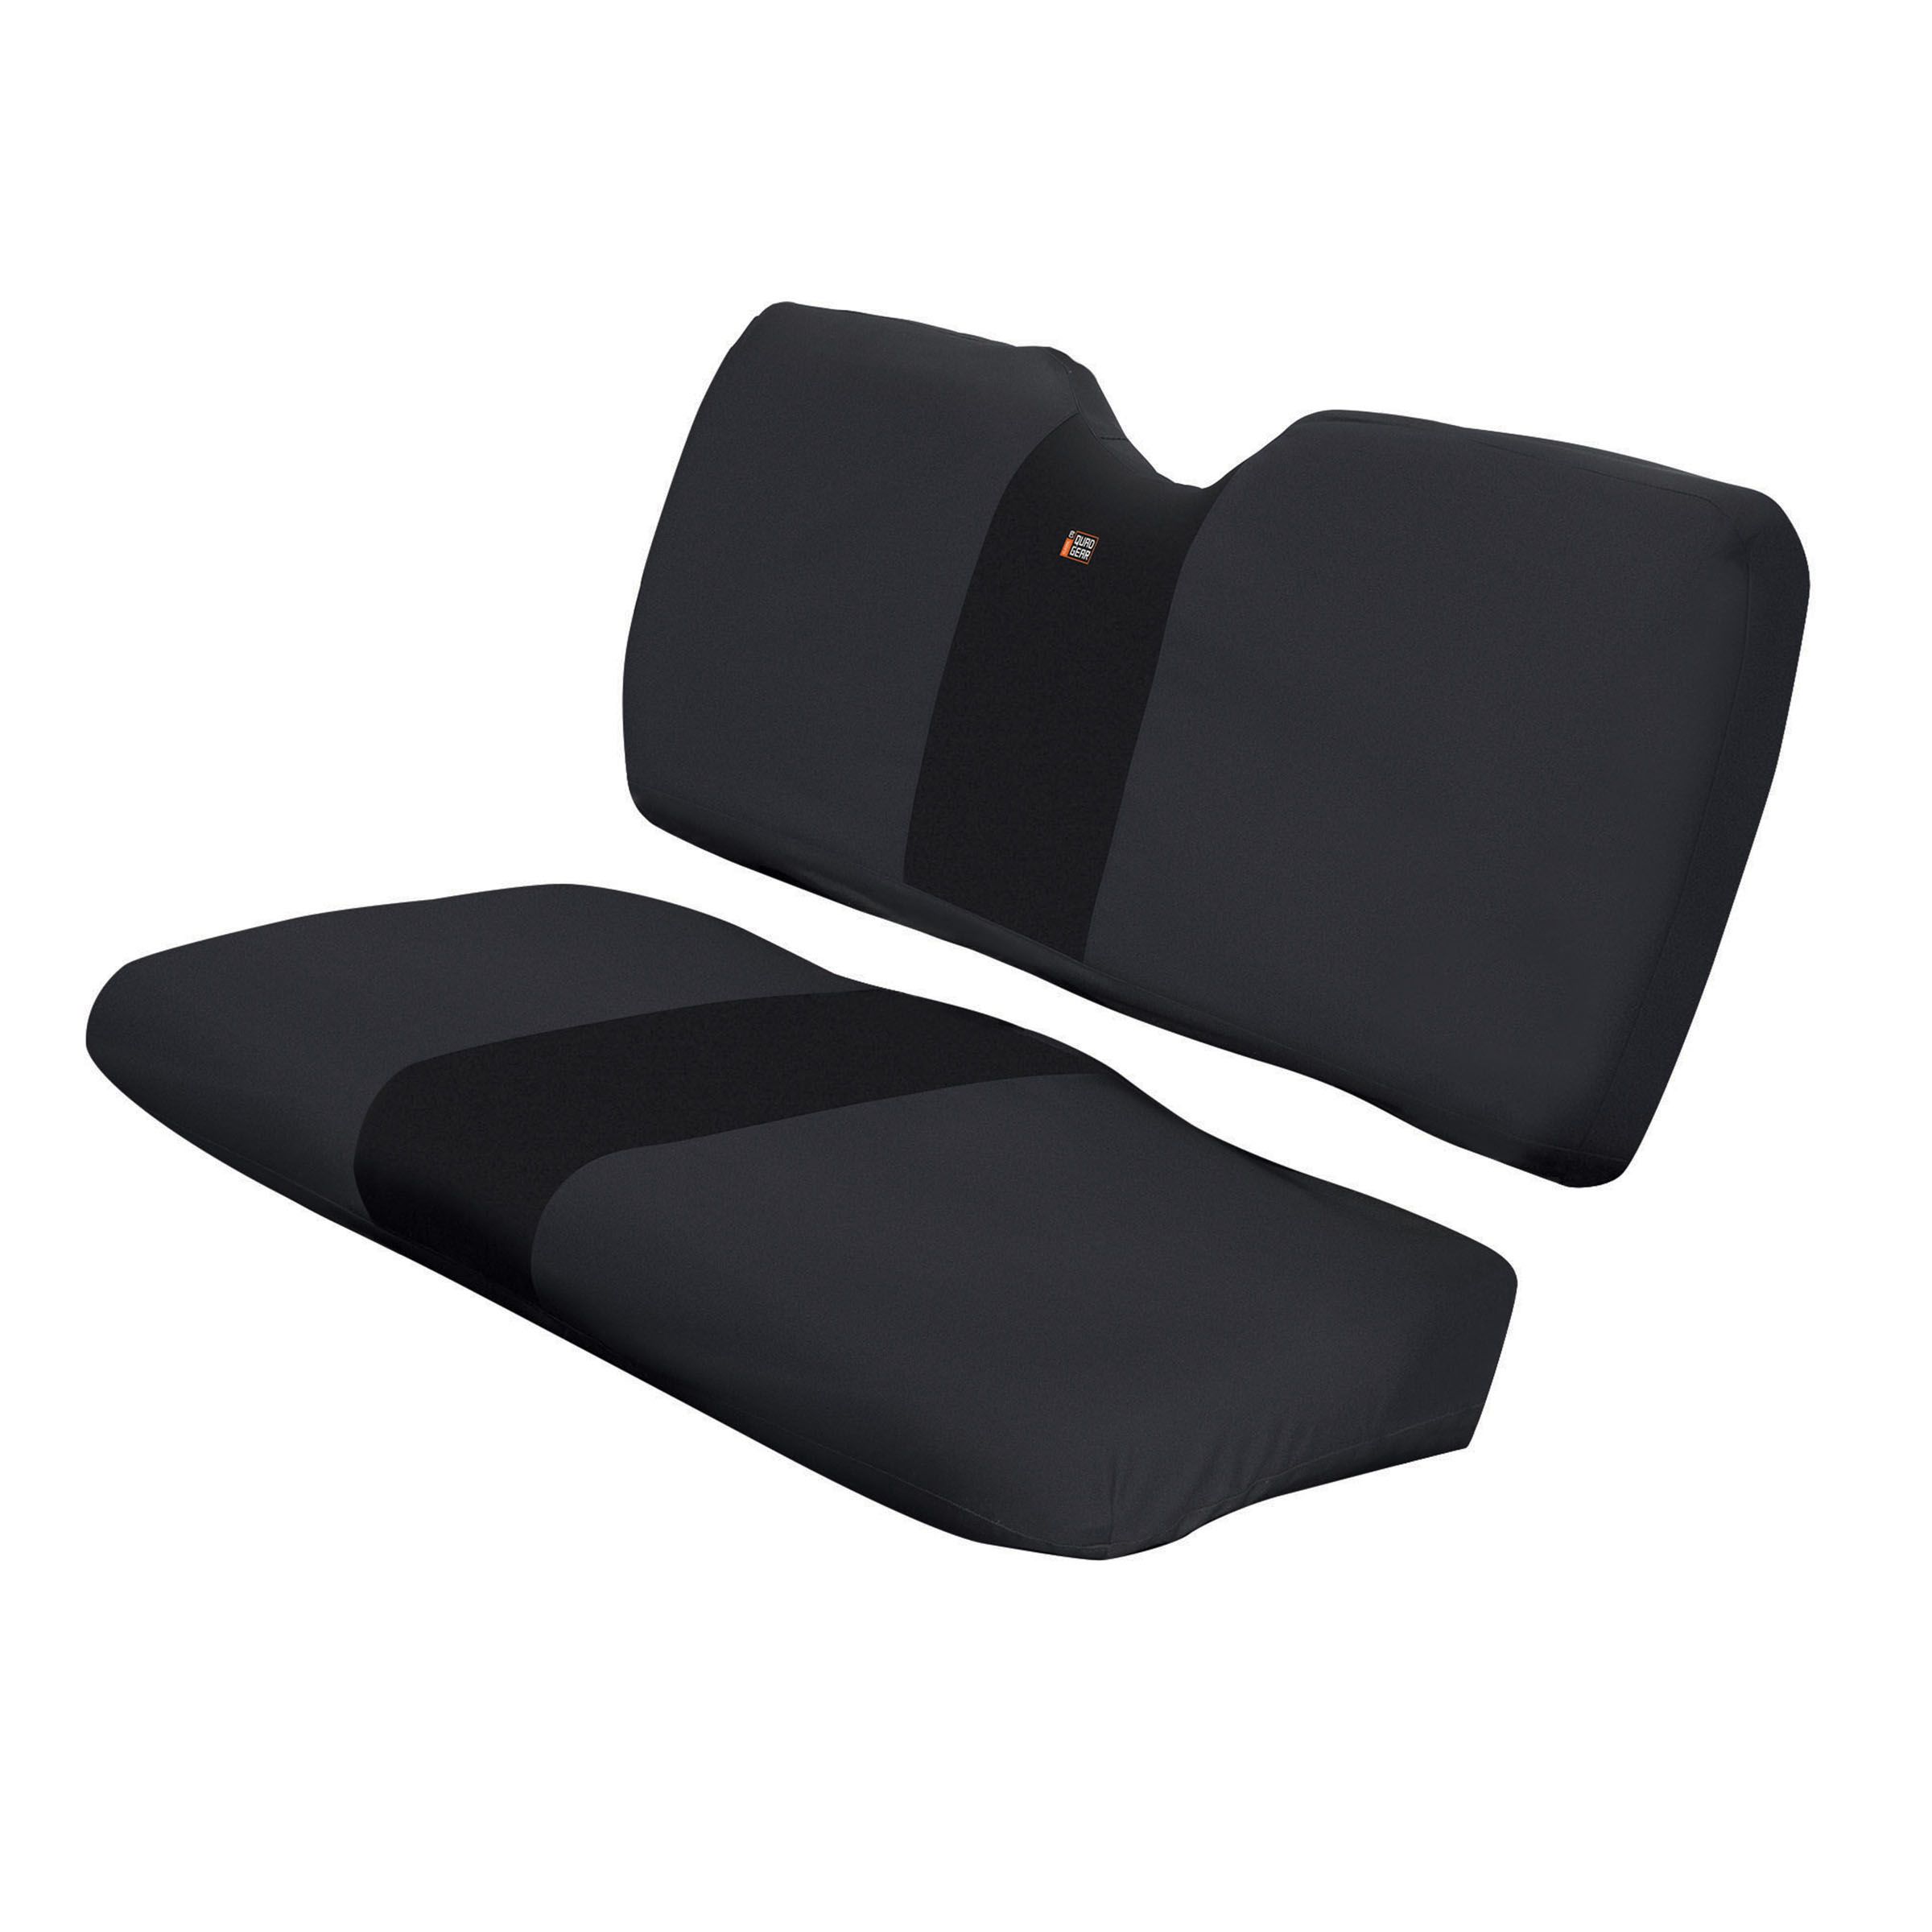 Polaris® Ranger 400570, 800 Mid 2015+ Seat Cover